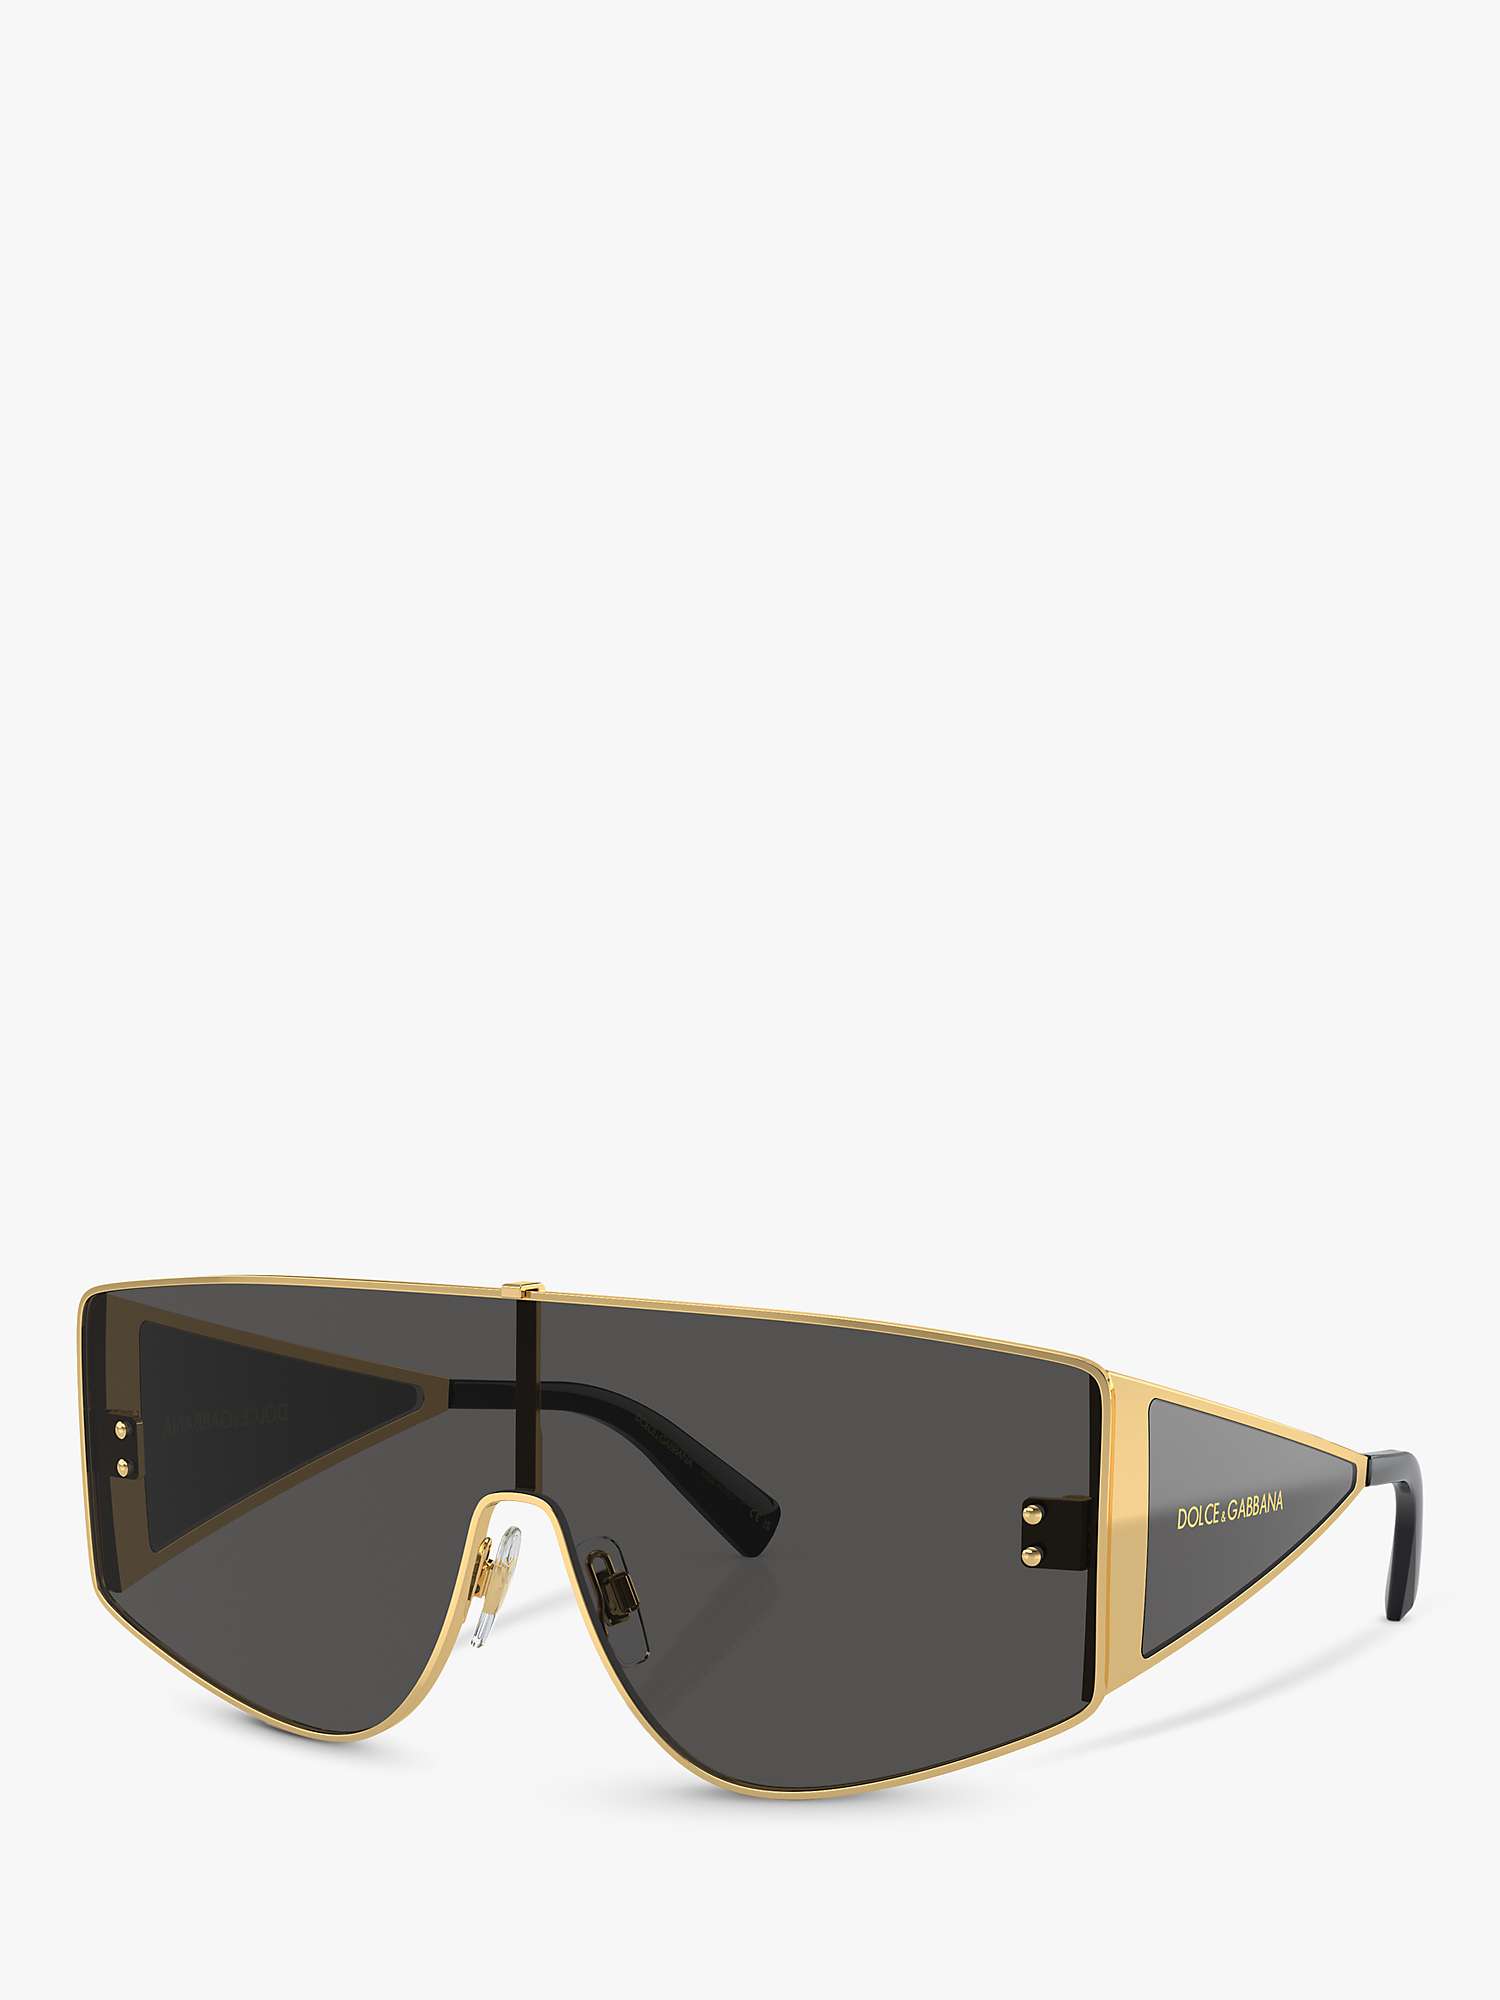 Buy Dolce & Gabbana DG2305 Men's Irregular Sunglasses Online at johnlewis.com